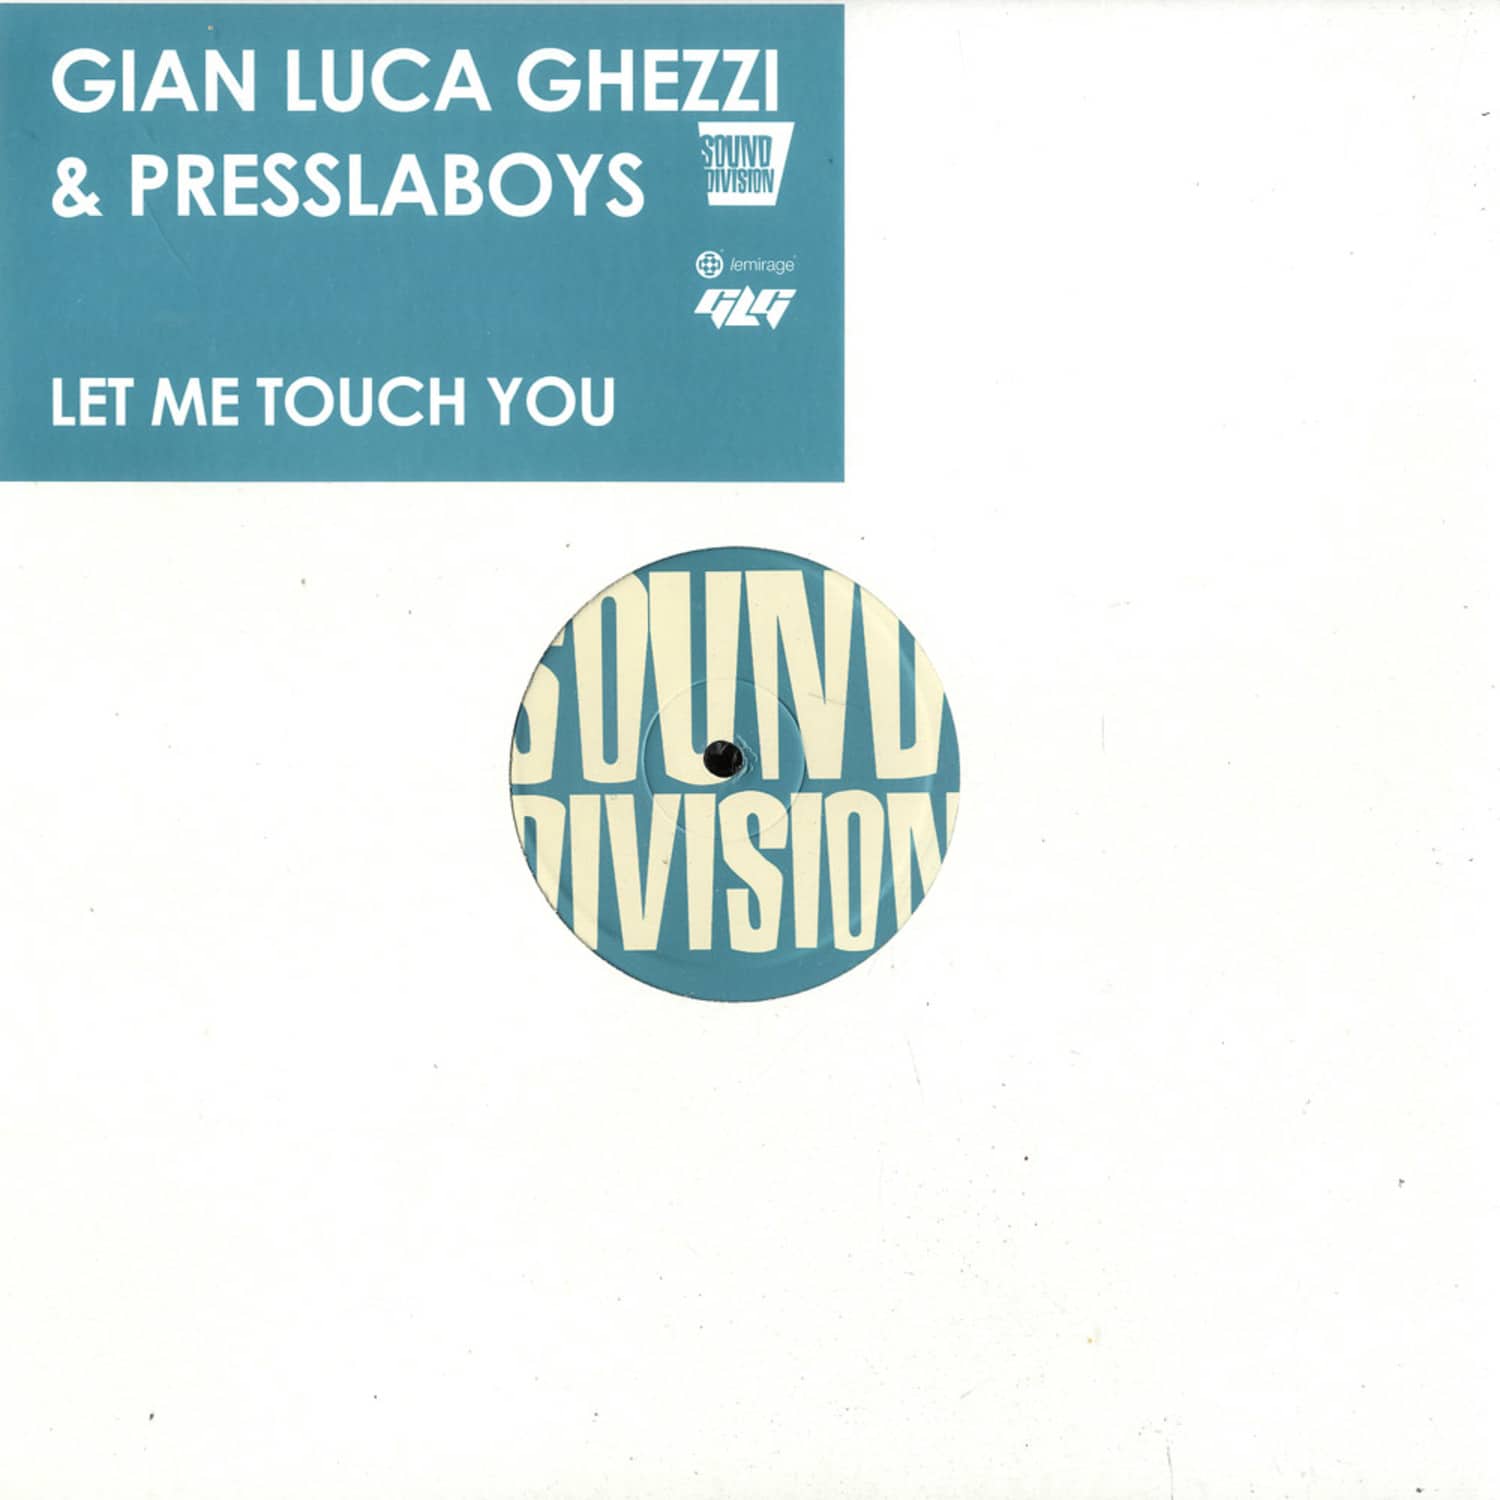 Gian Luca Ghezzi & Presslaboys - LET ME TOUCH YOU